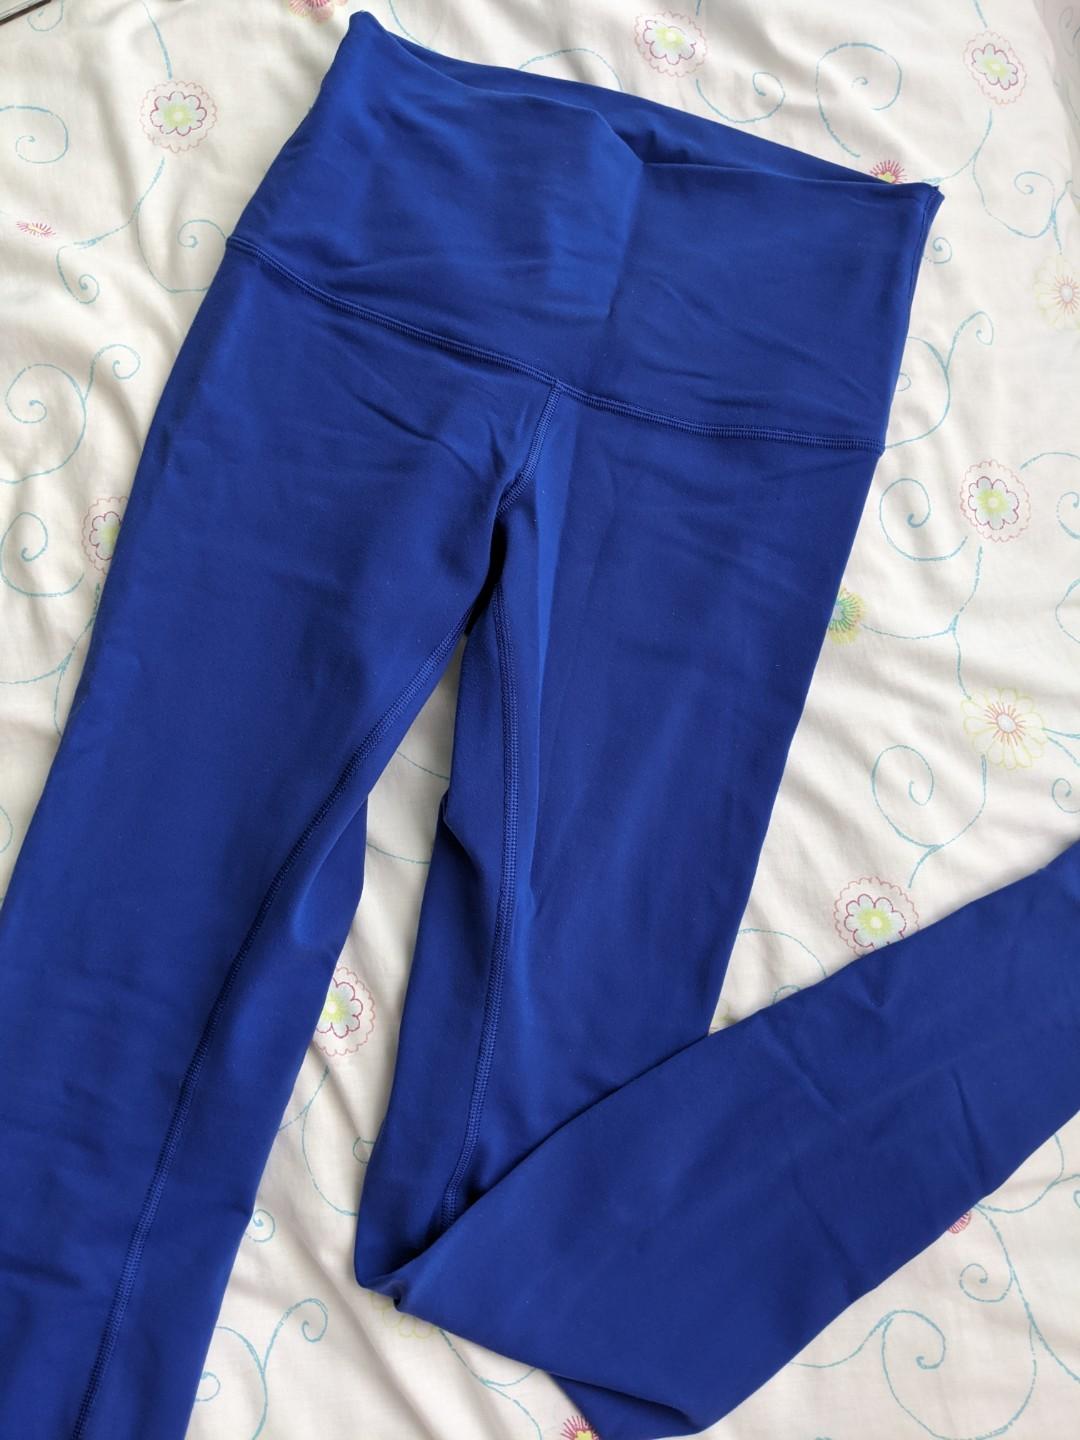 https://media.karousell.com/media/photos/products/2020/01/25/lululemon_royal_blue_leggings_size_6_1579941033_07098720_progressive.jpg